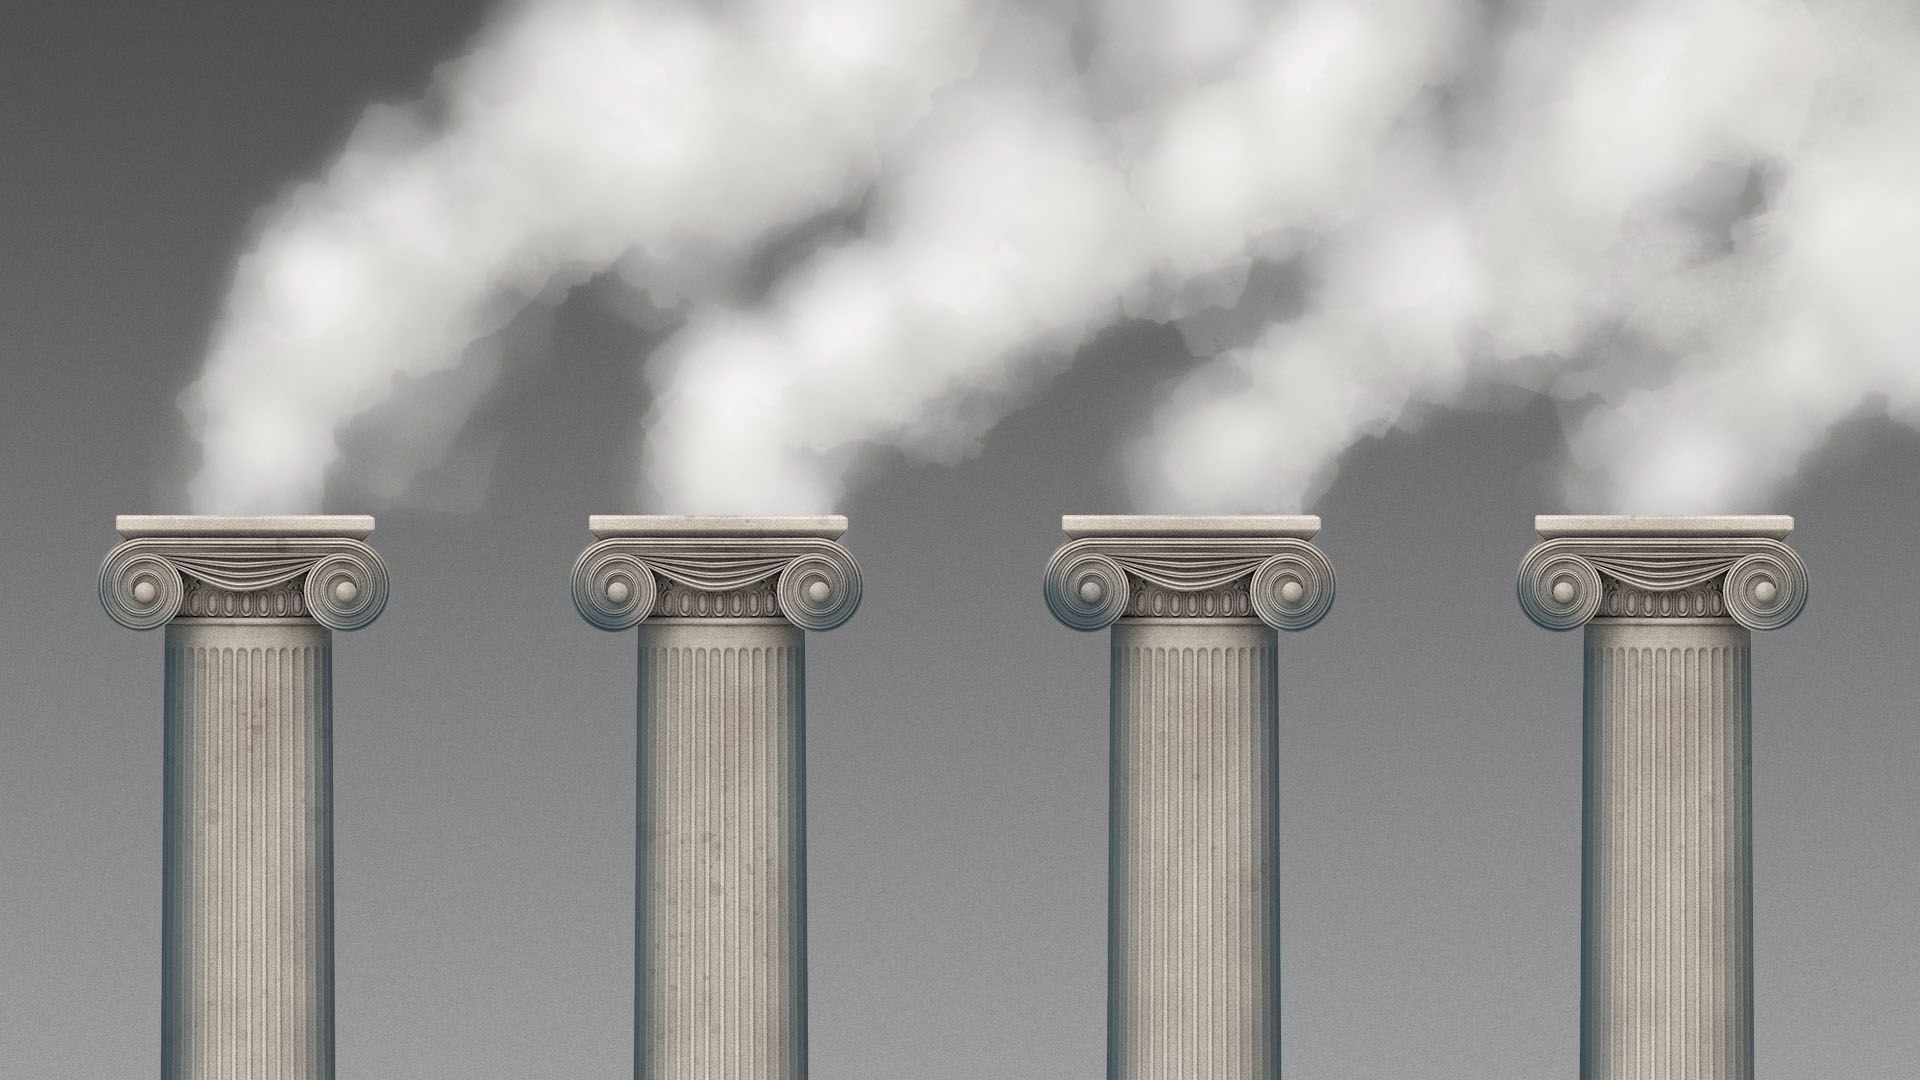 Illustration of stone bank columns as smoke stacks